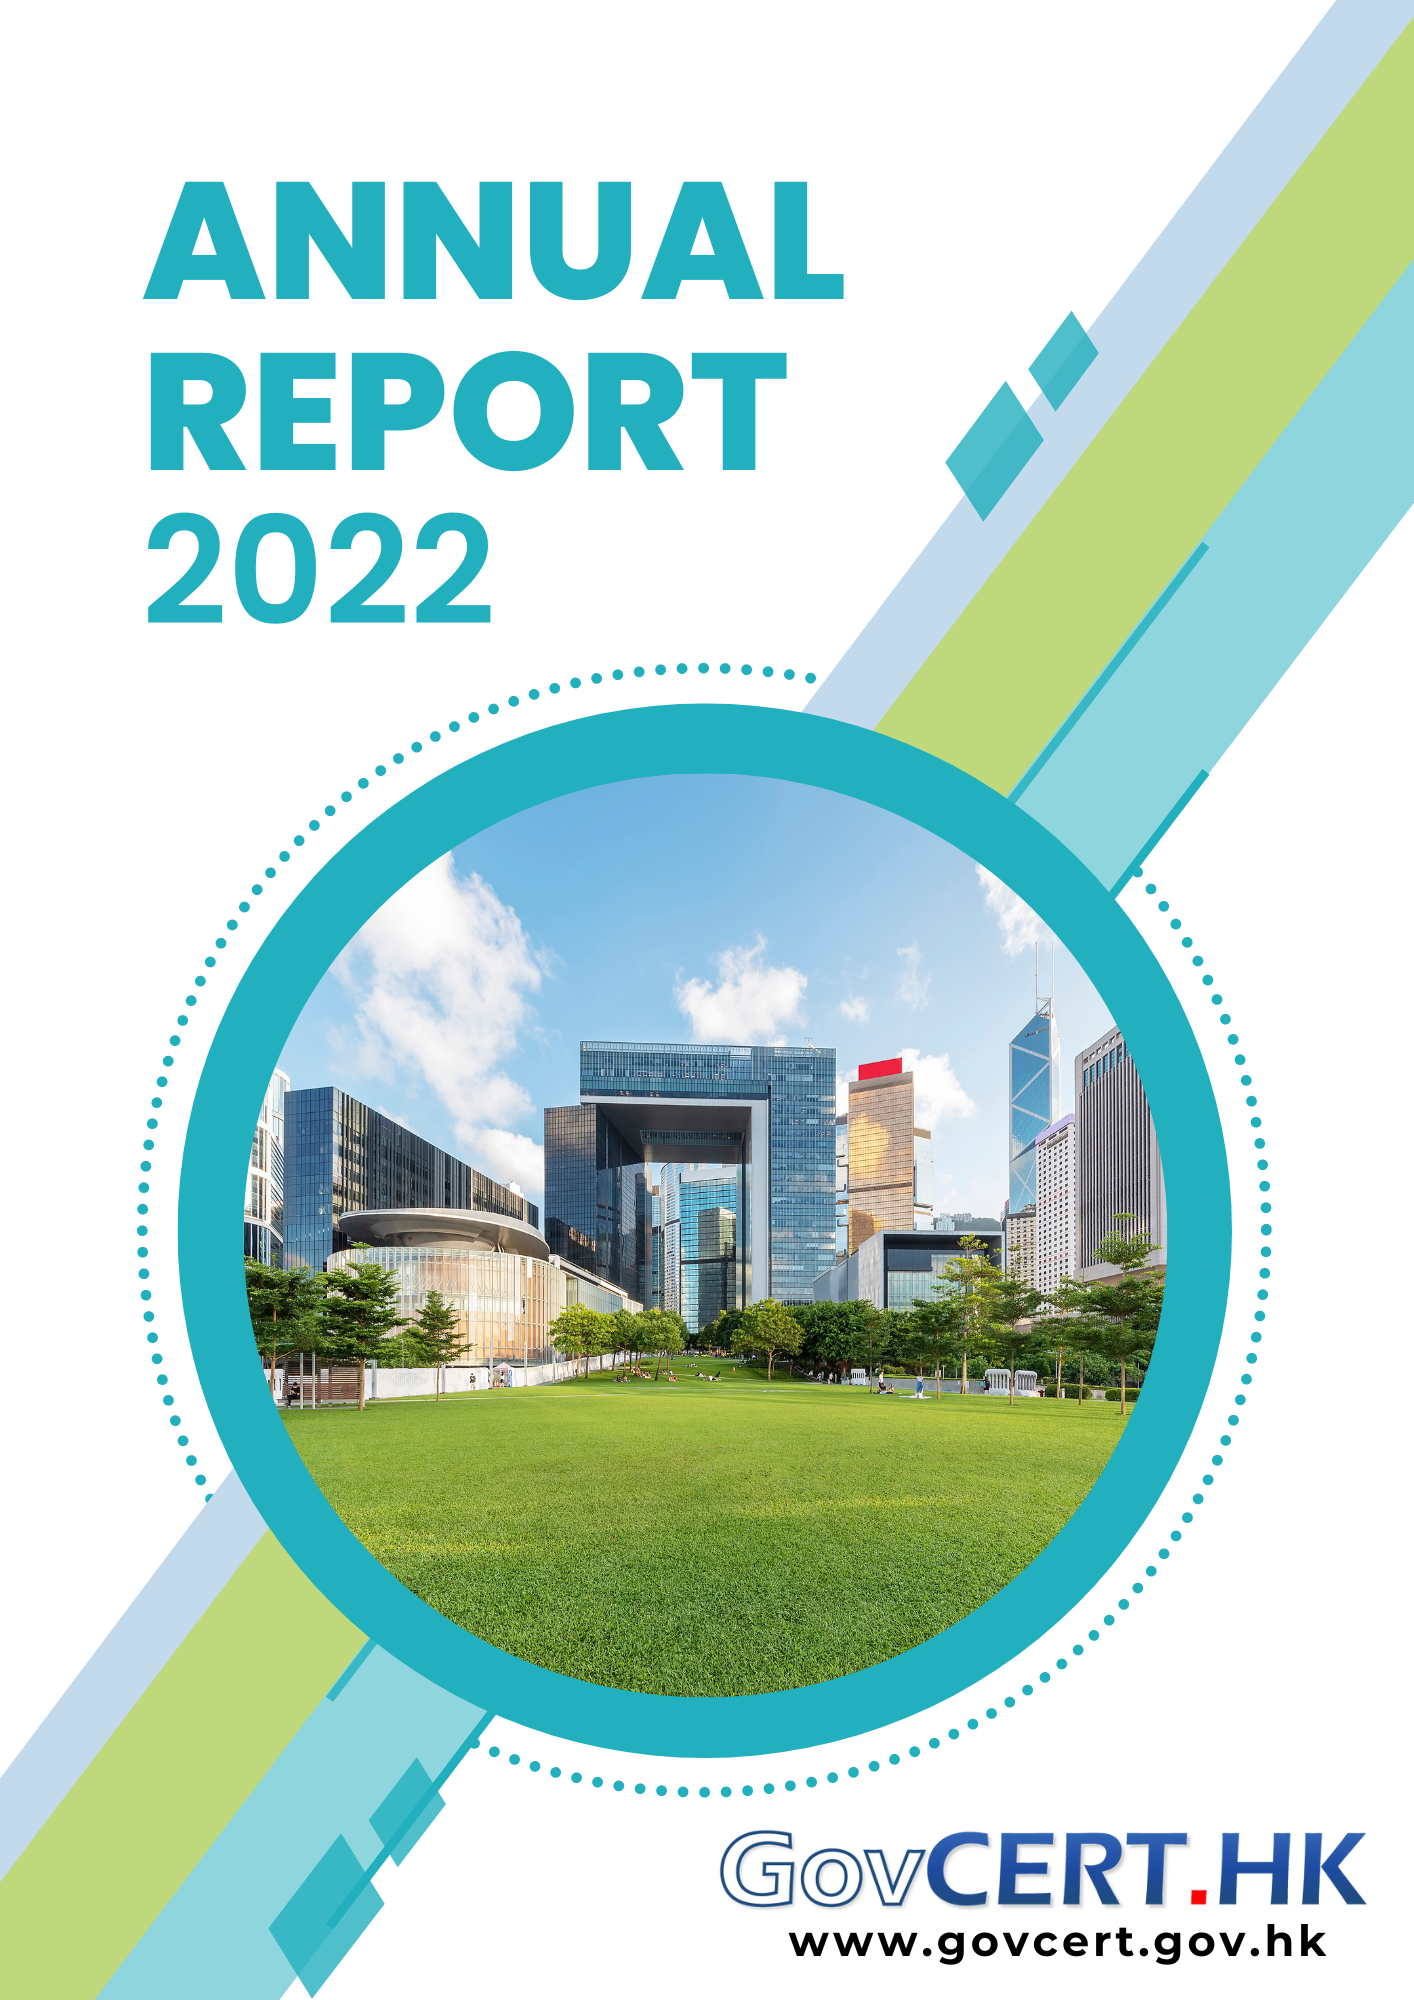 GovCERT.HK Annual Report 2022